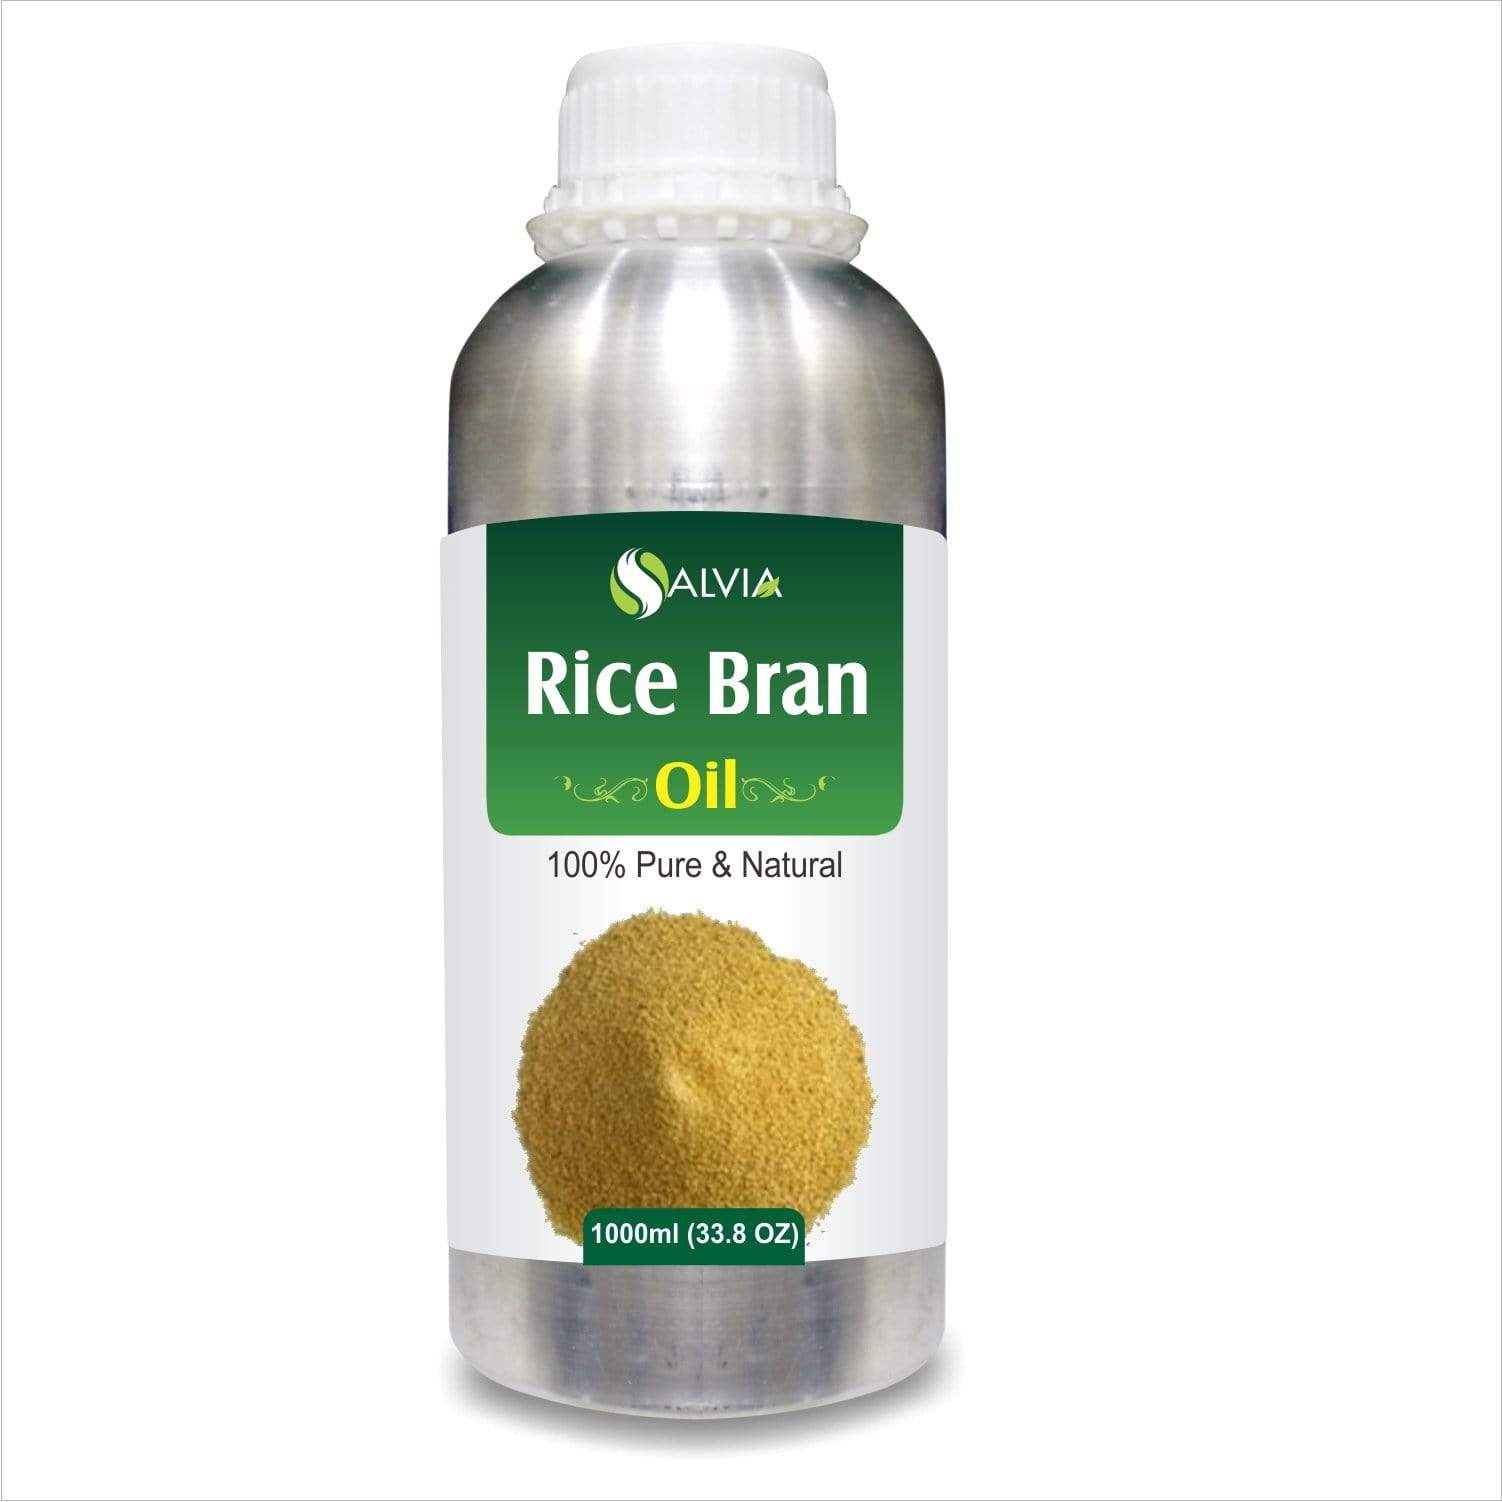 advantages of rice bran oil